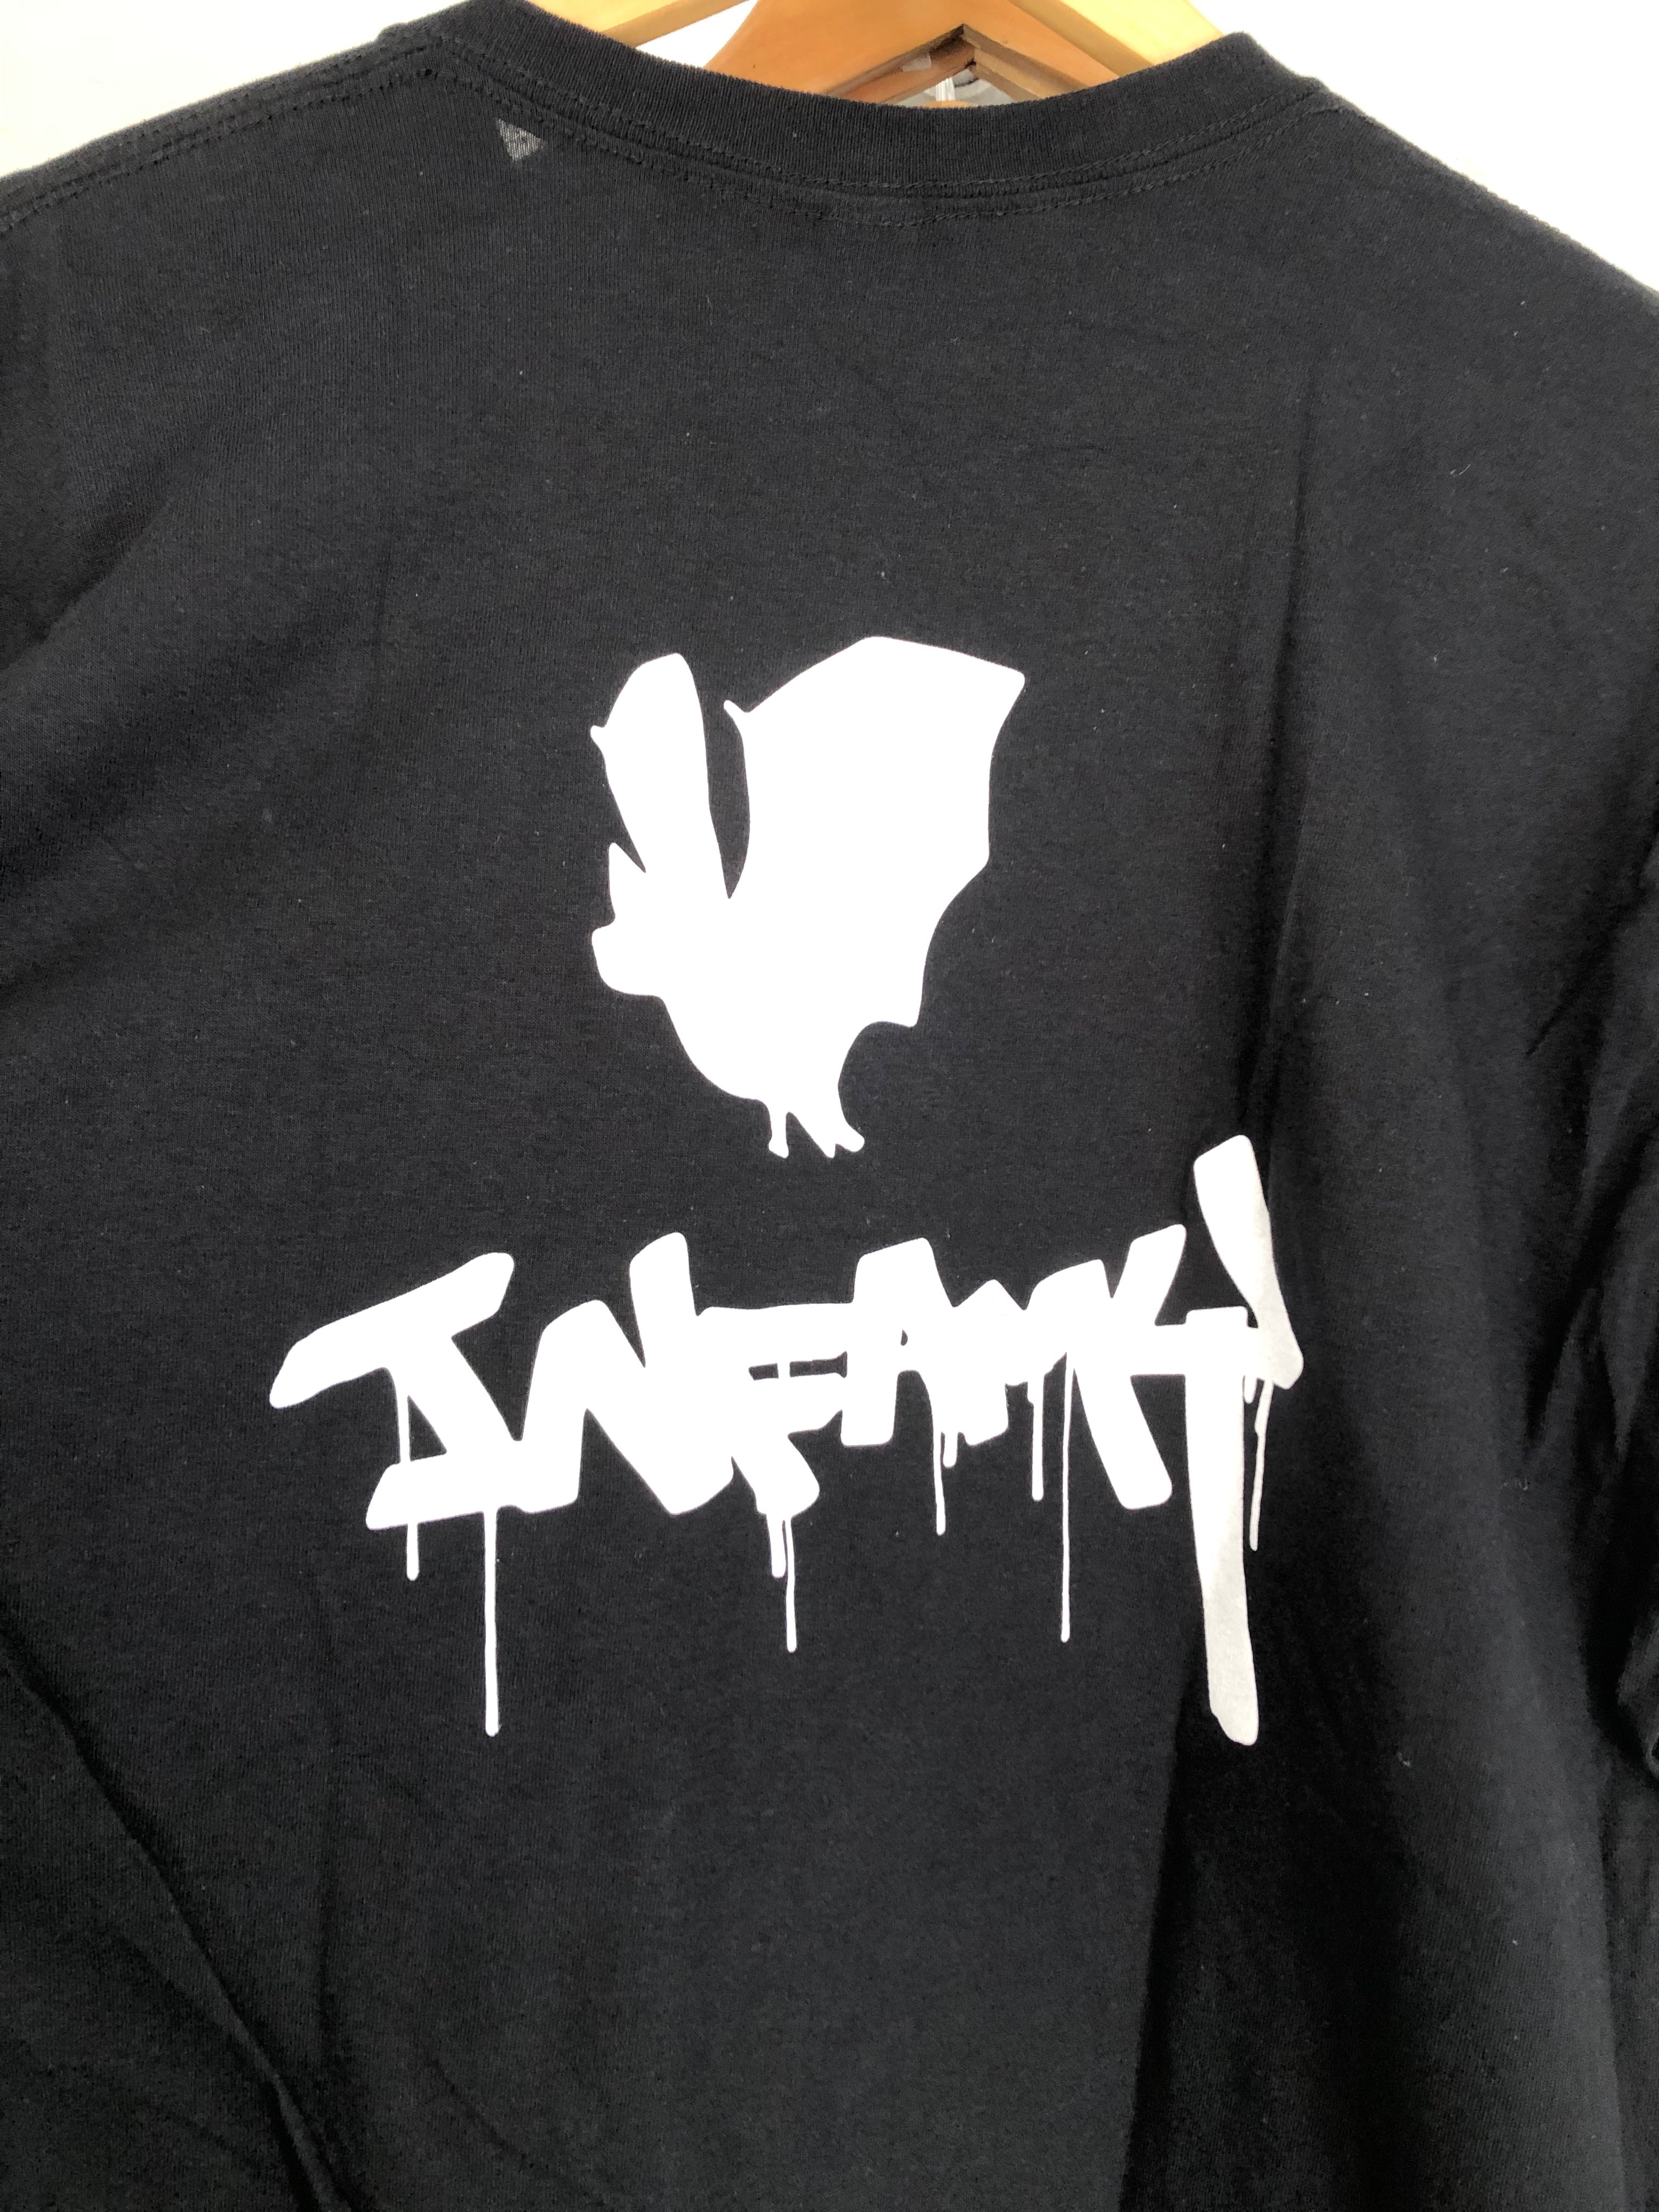 Infamy T-Shirt